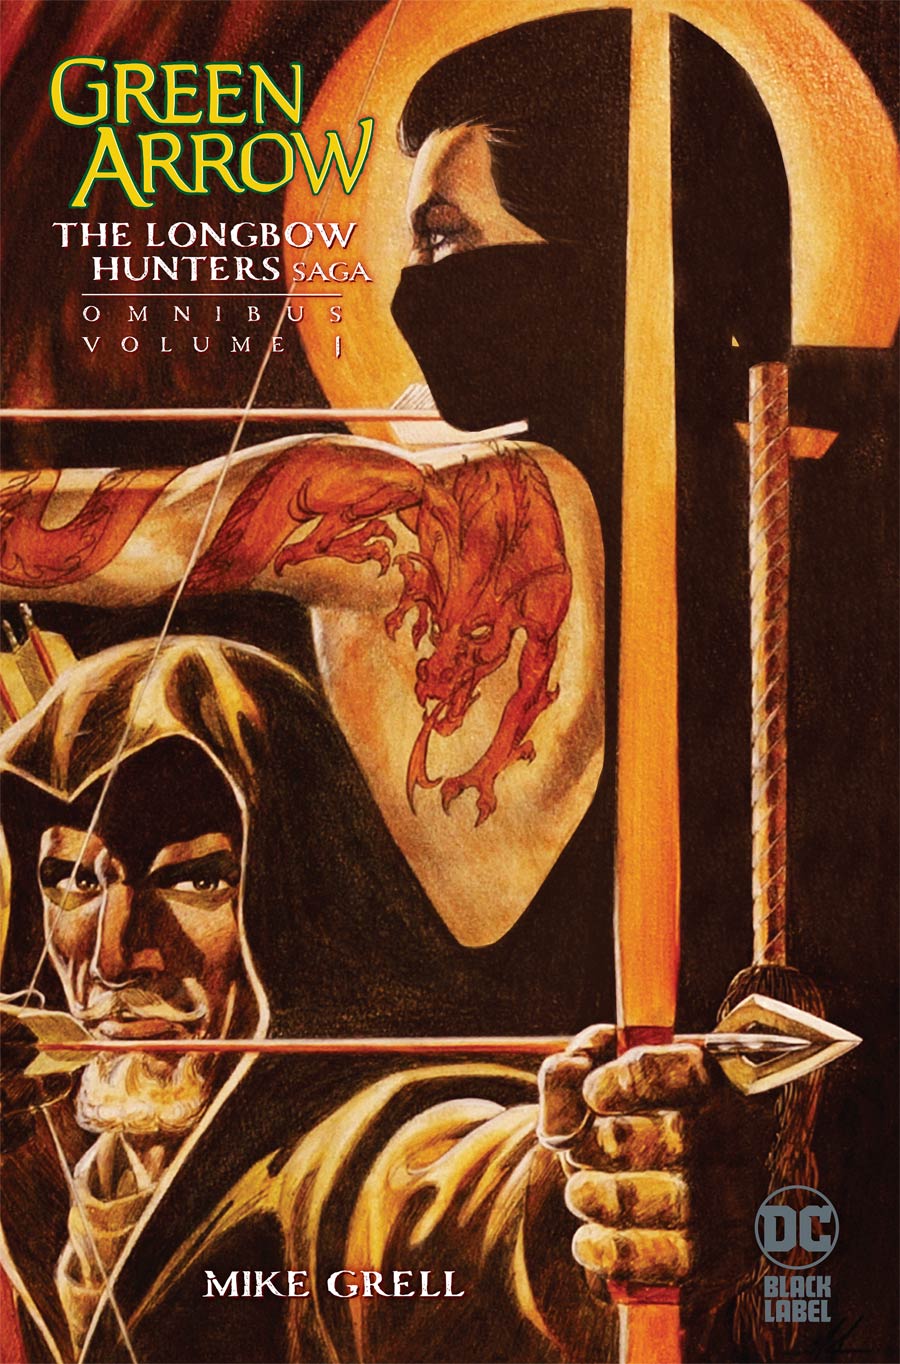 Green Arrow: The Longbow Hunters Saga by Mike Grell Omnibus Volume 1 HC